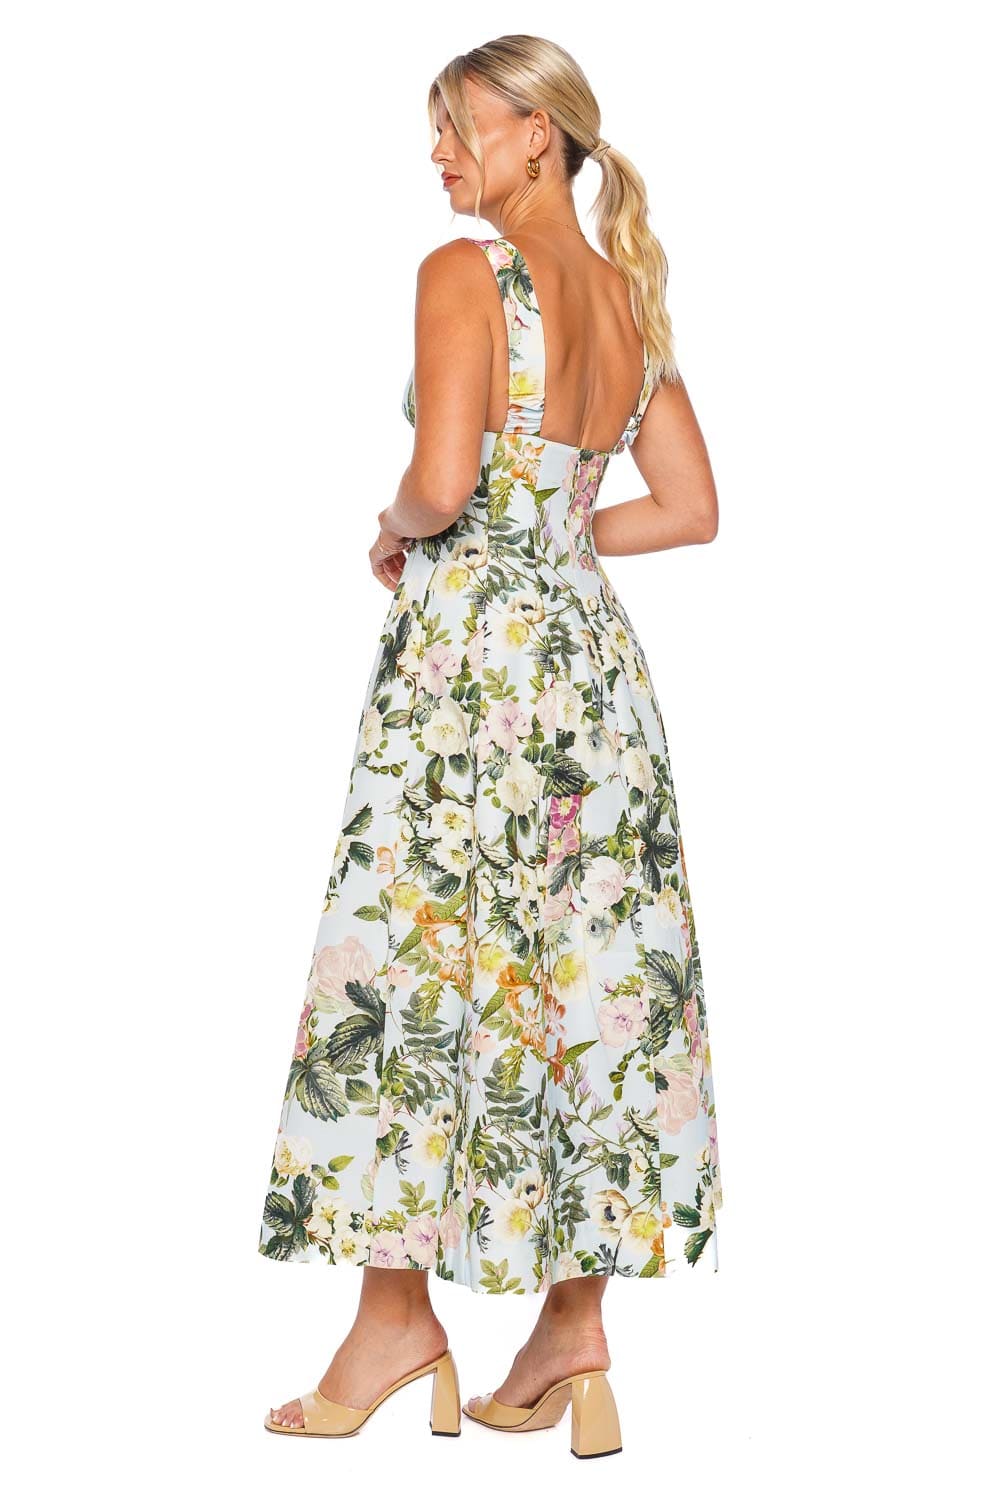 Cara Cara Naples Kingston Floral Midi Dress